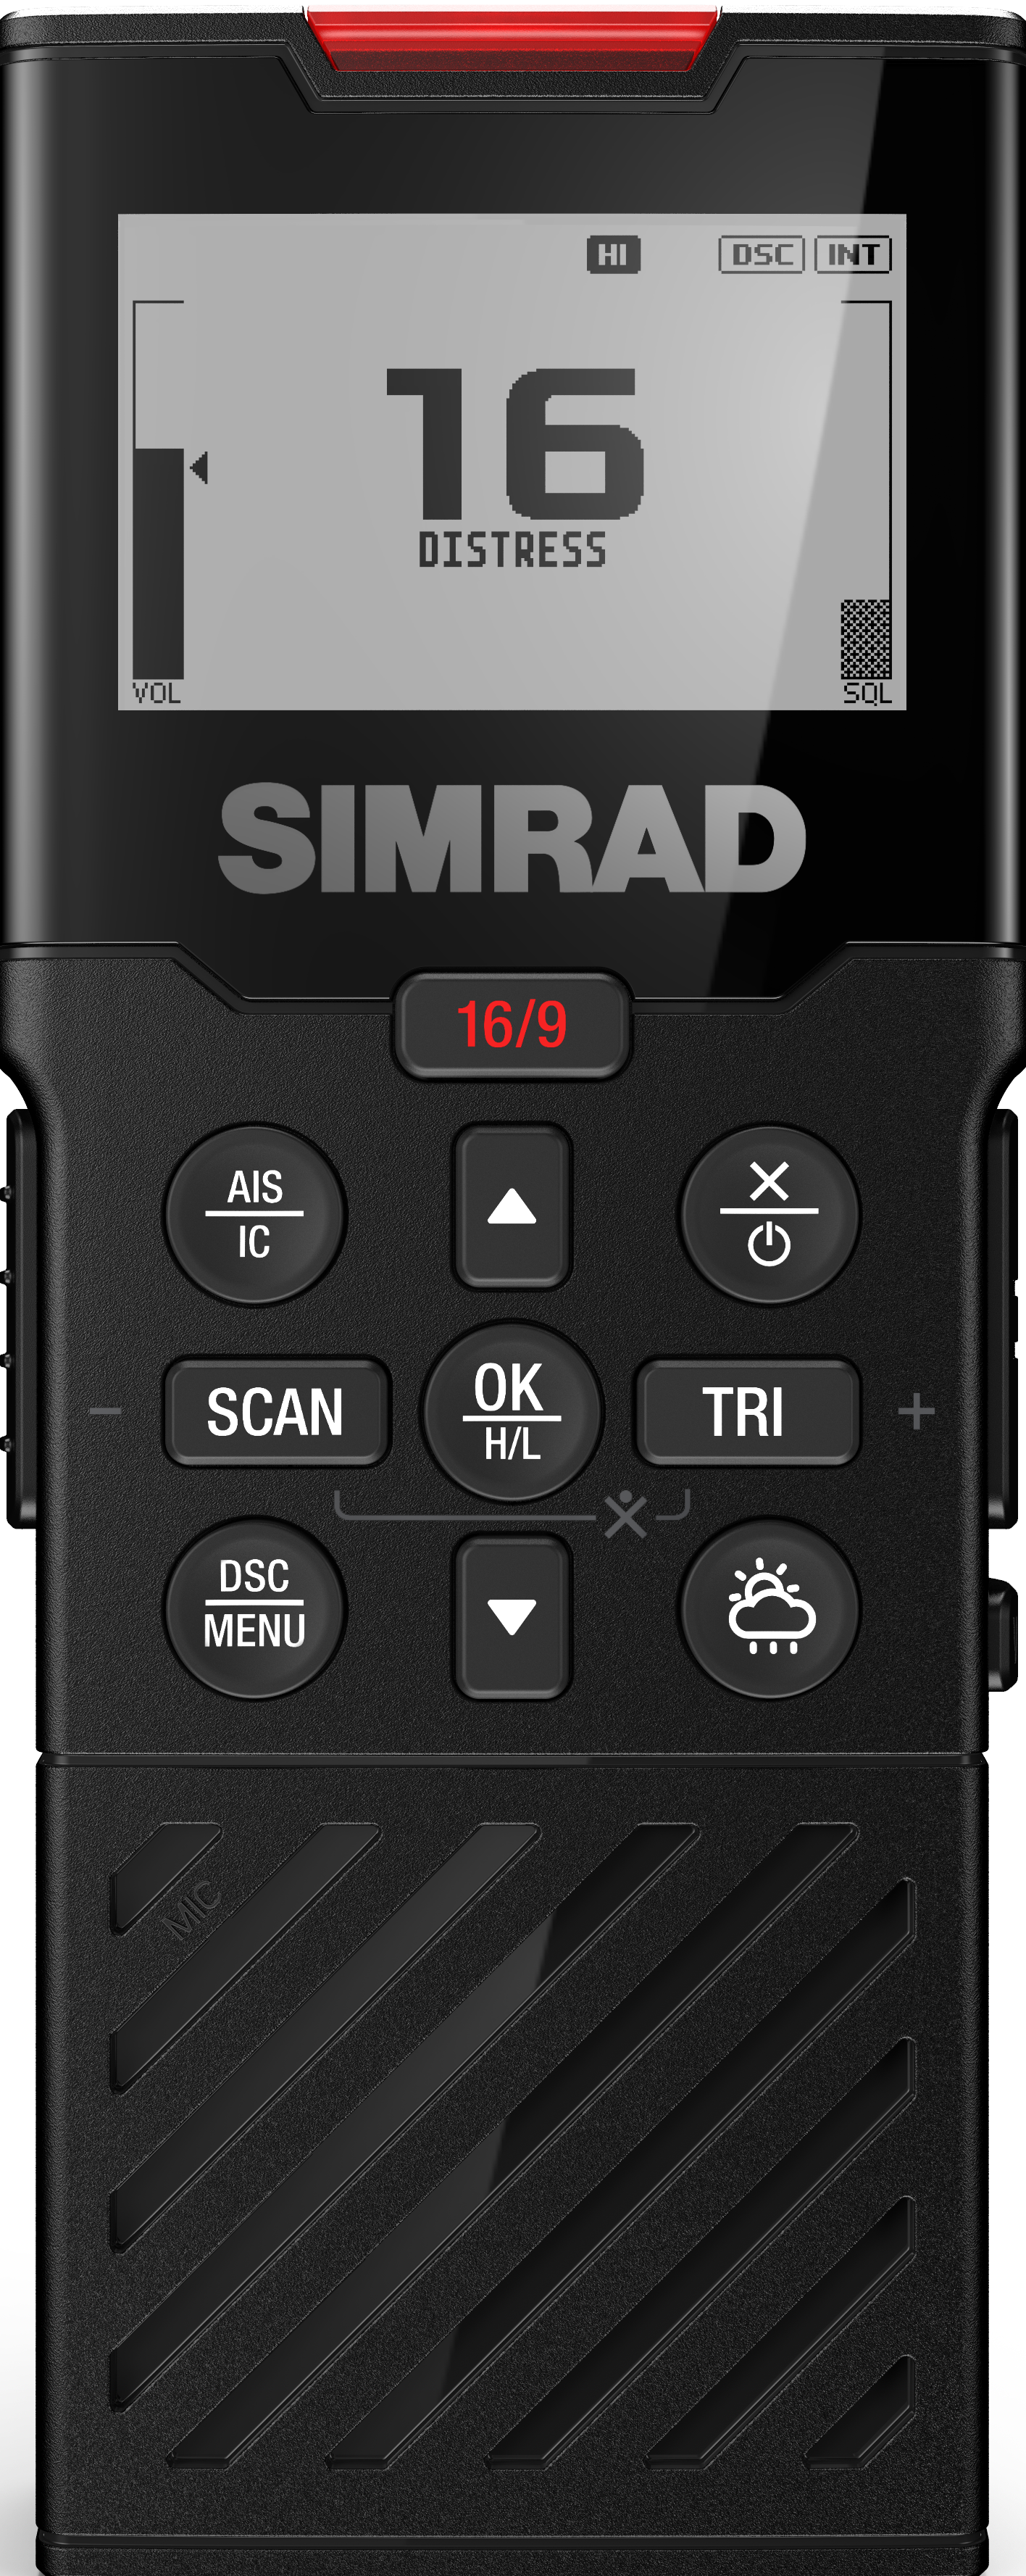 VHF RADIO (SIMRAD)